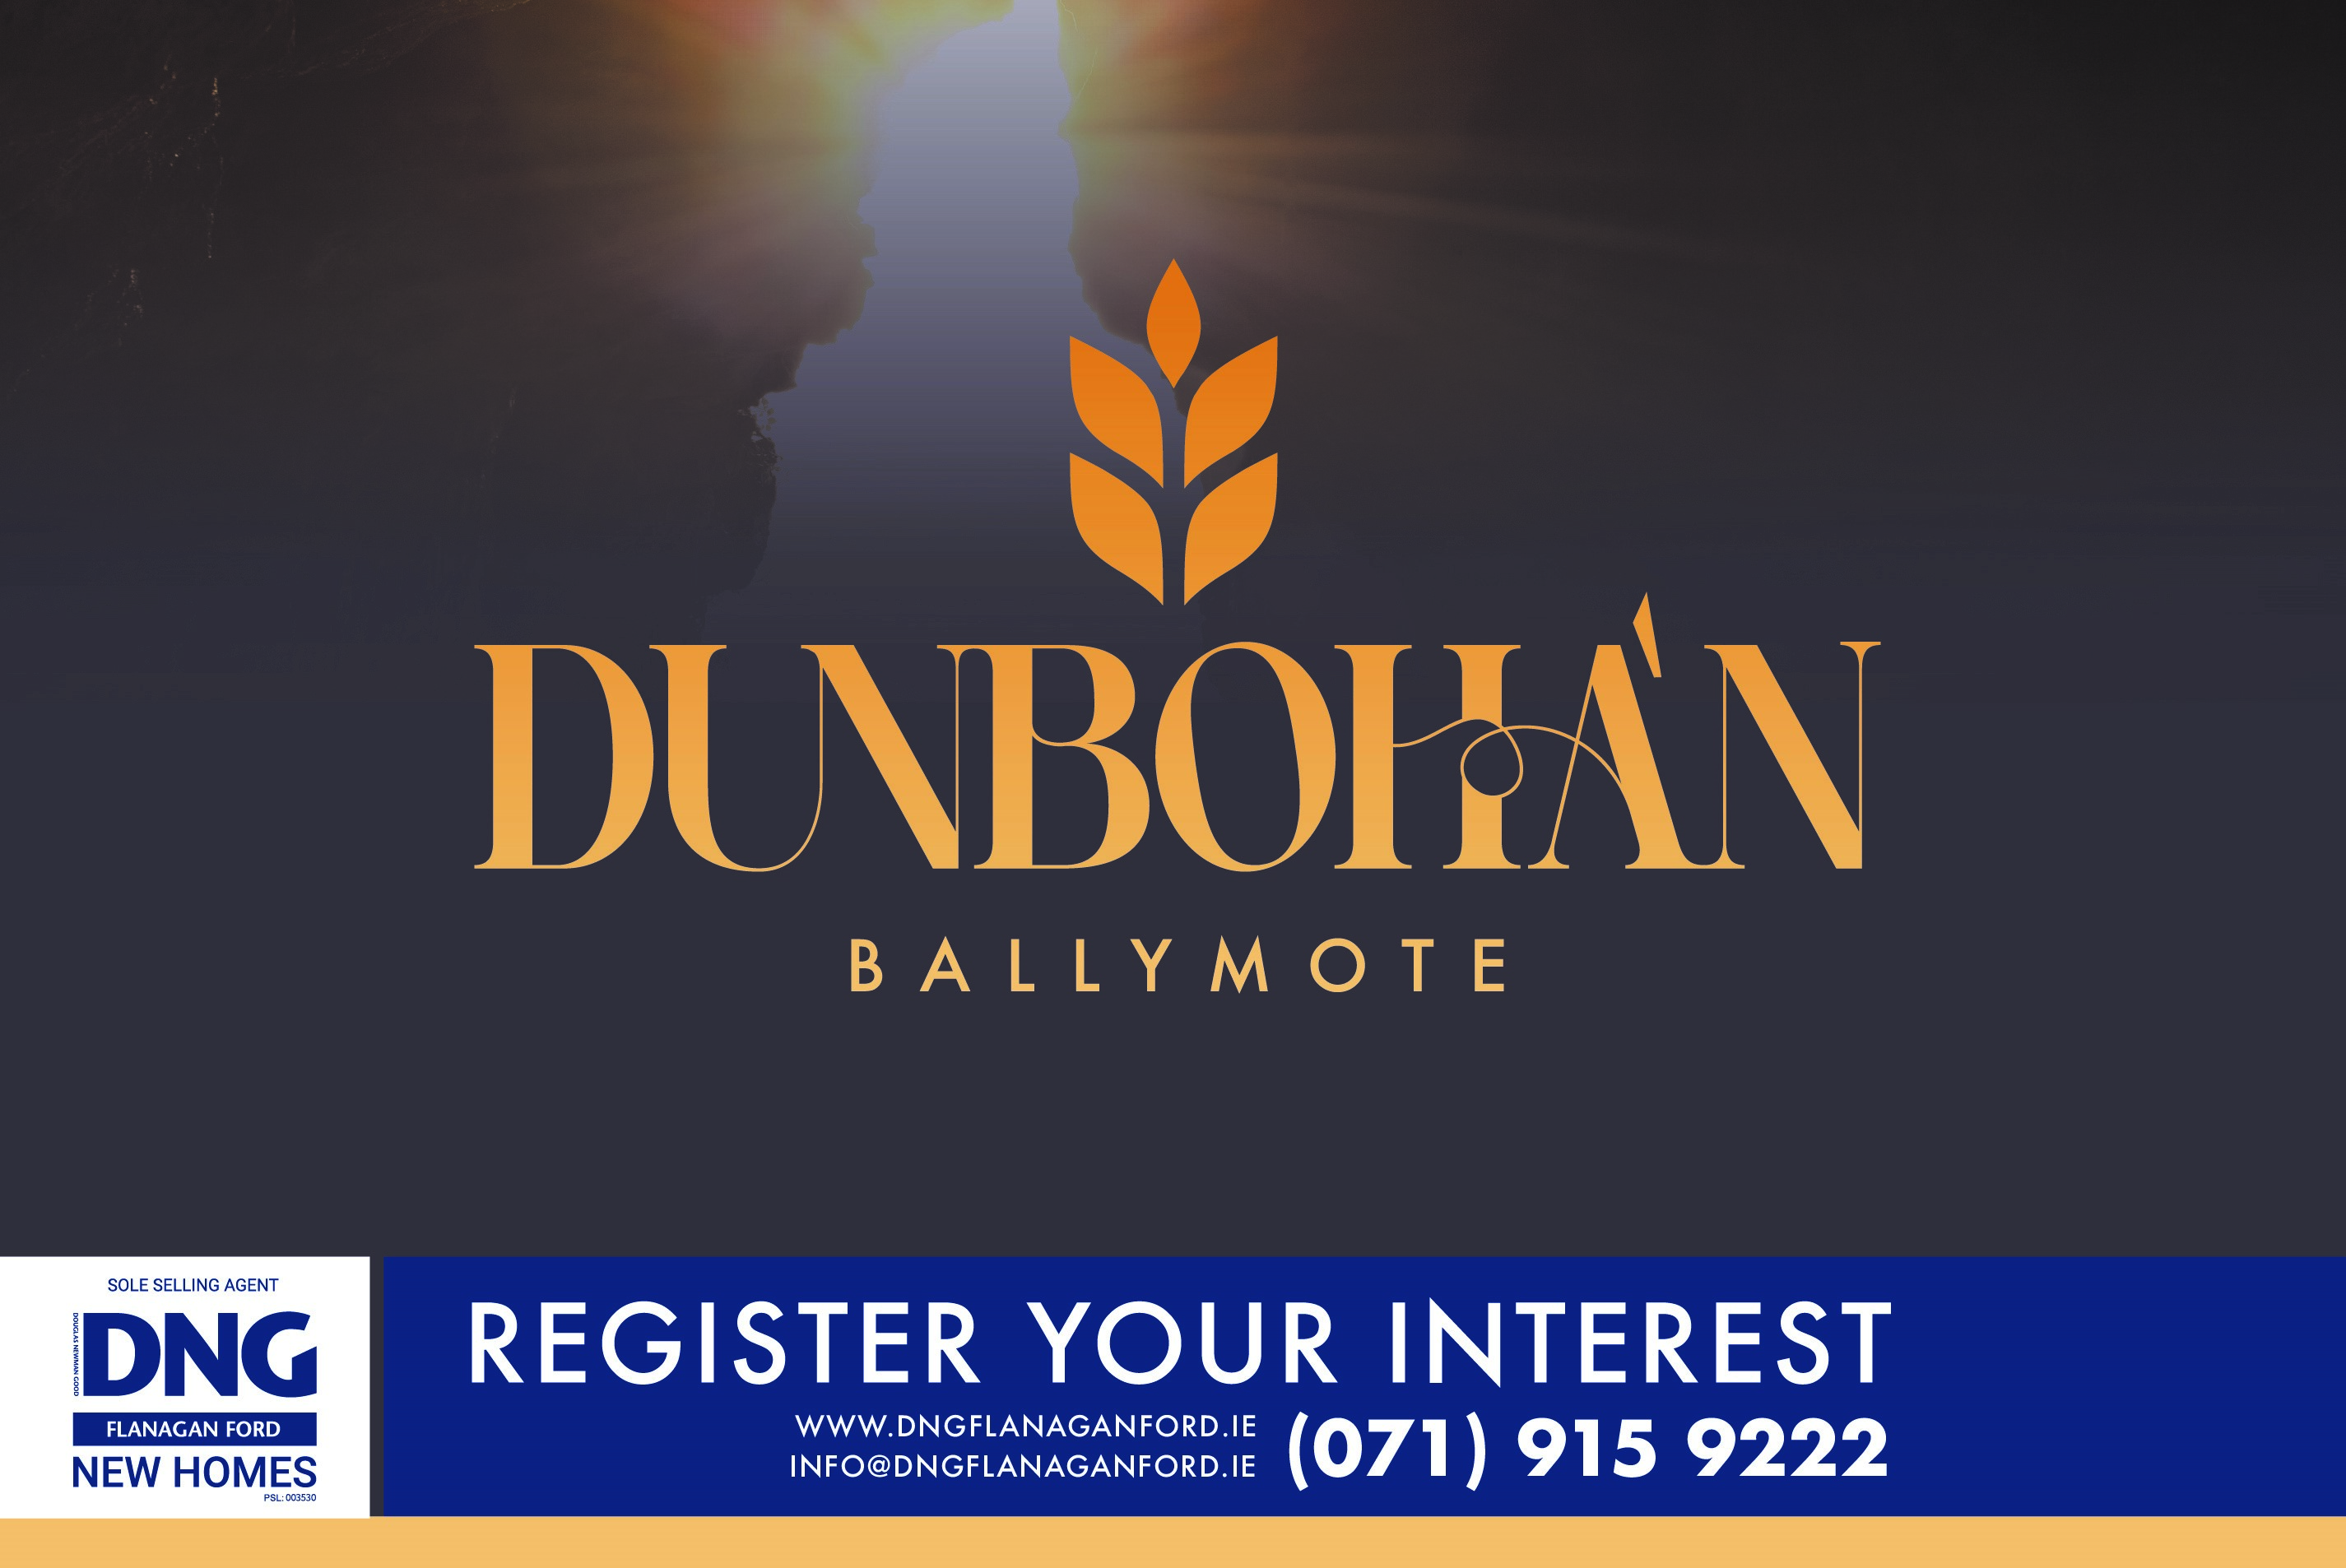 DunBohan, Ballymote, Co. Sligo, Ireland